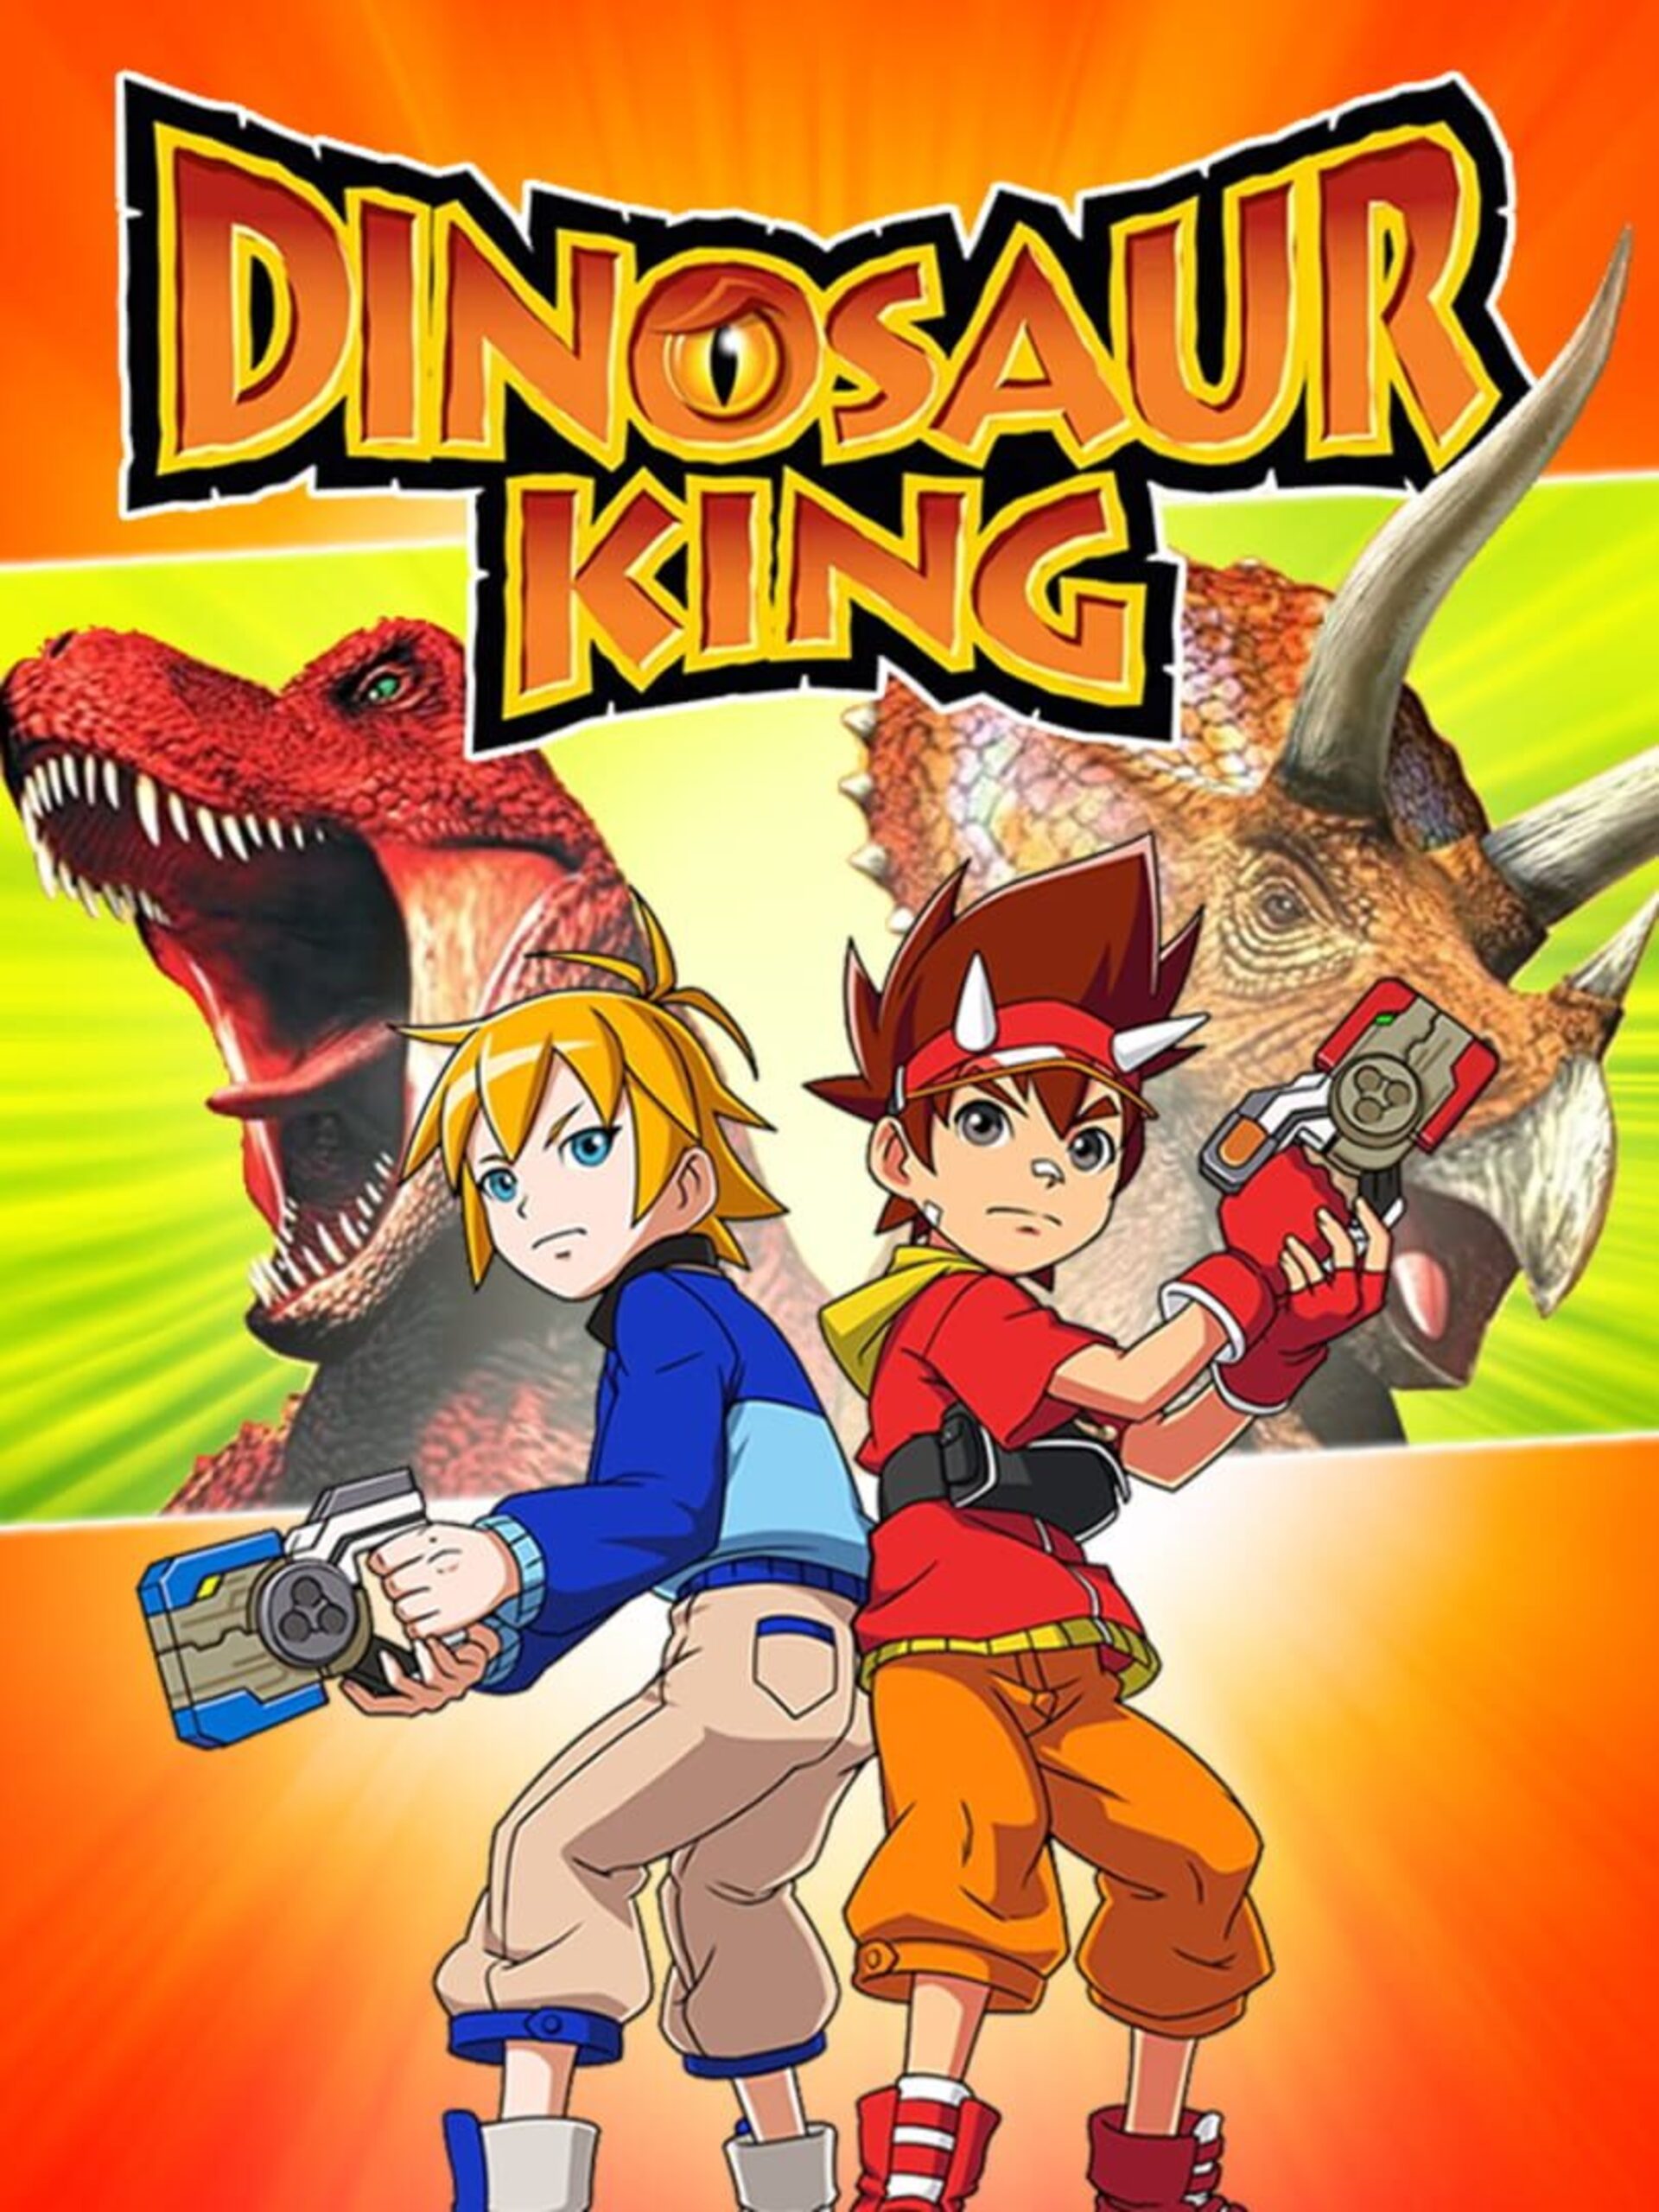 Dinosaur King. Nintendo king